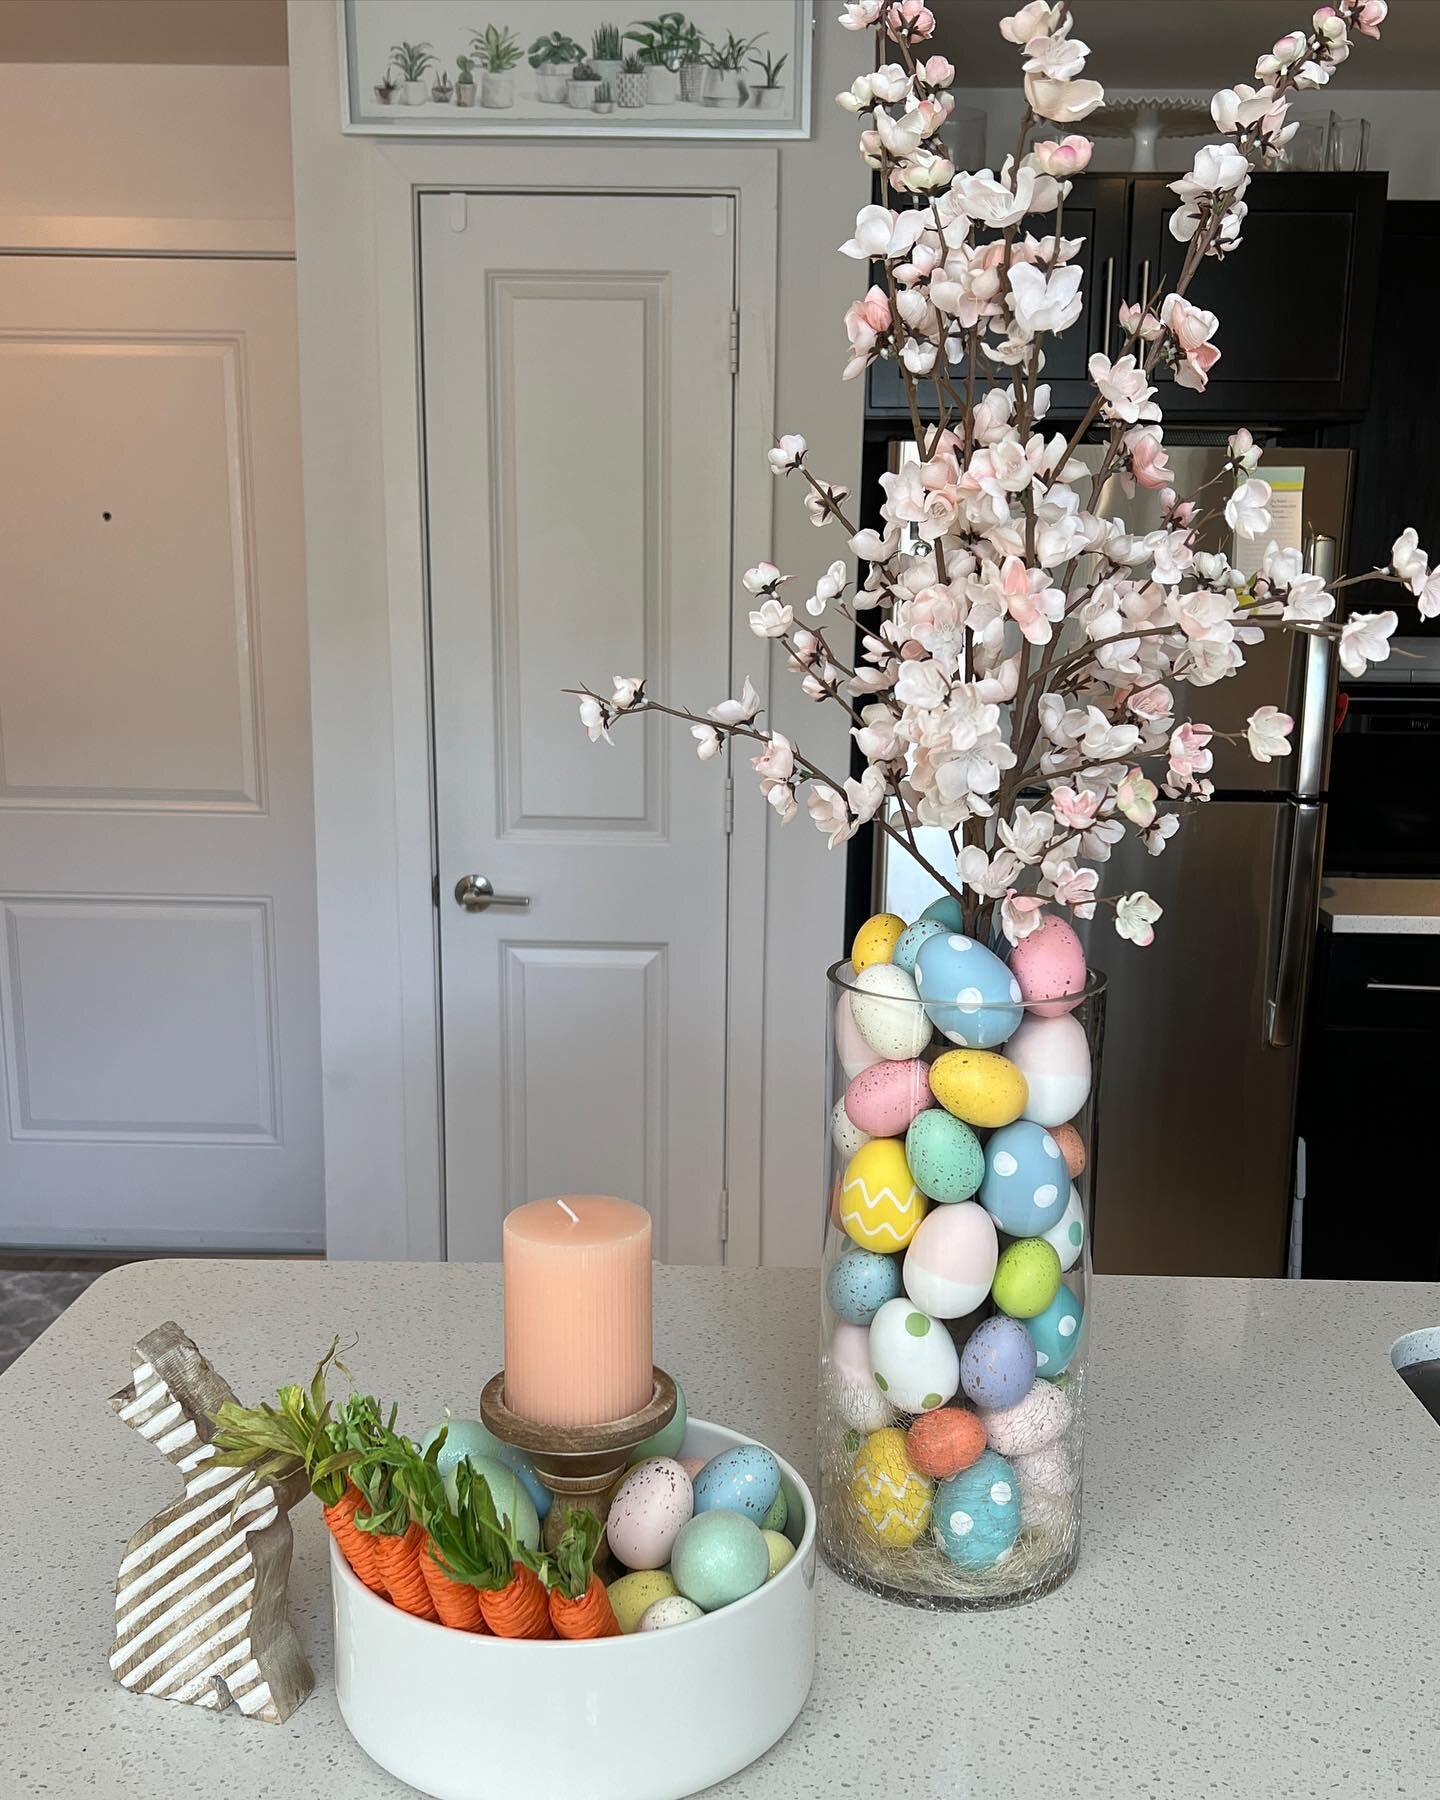 Wishing everyone a sweet and hoppy Easter! 🐣🐇💐

[#eventsbeyond #eb #holidayentertaining 
#easter #holiday #eastersunday #Eastercelebration #happyeaster 
#easterbunny #easterdecor #easterflowers #easterbasket #eastercandy #easteregghunt #eastereggs